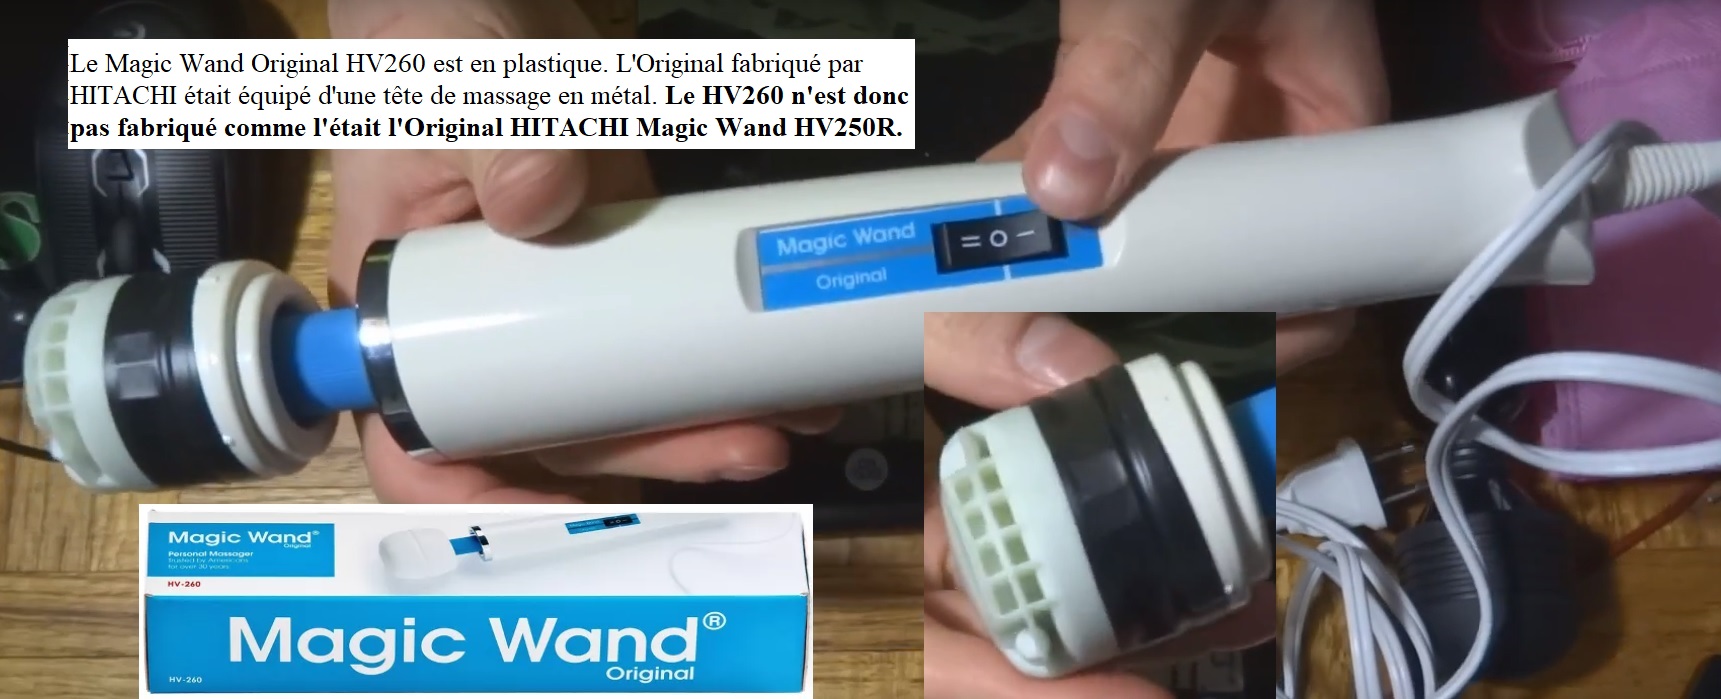 copie americaine non fidele de l hitachi magic wand hv250r